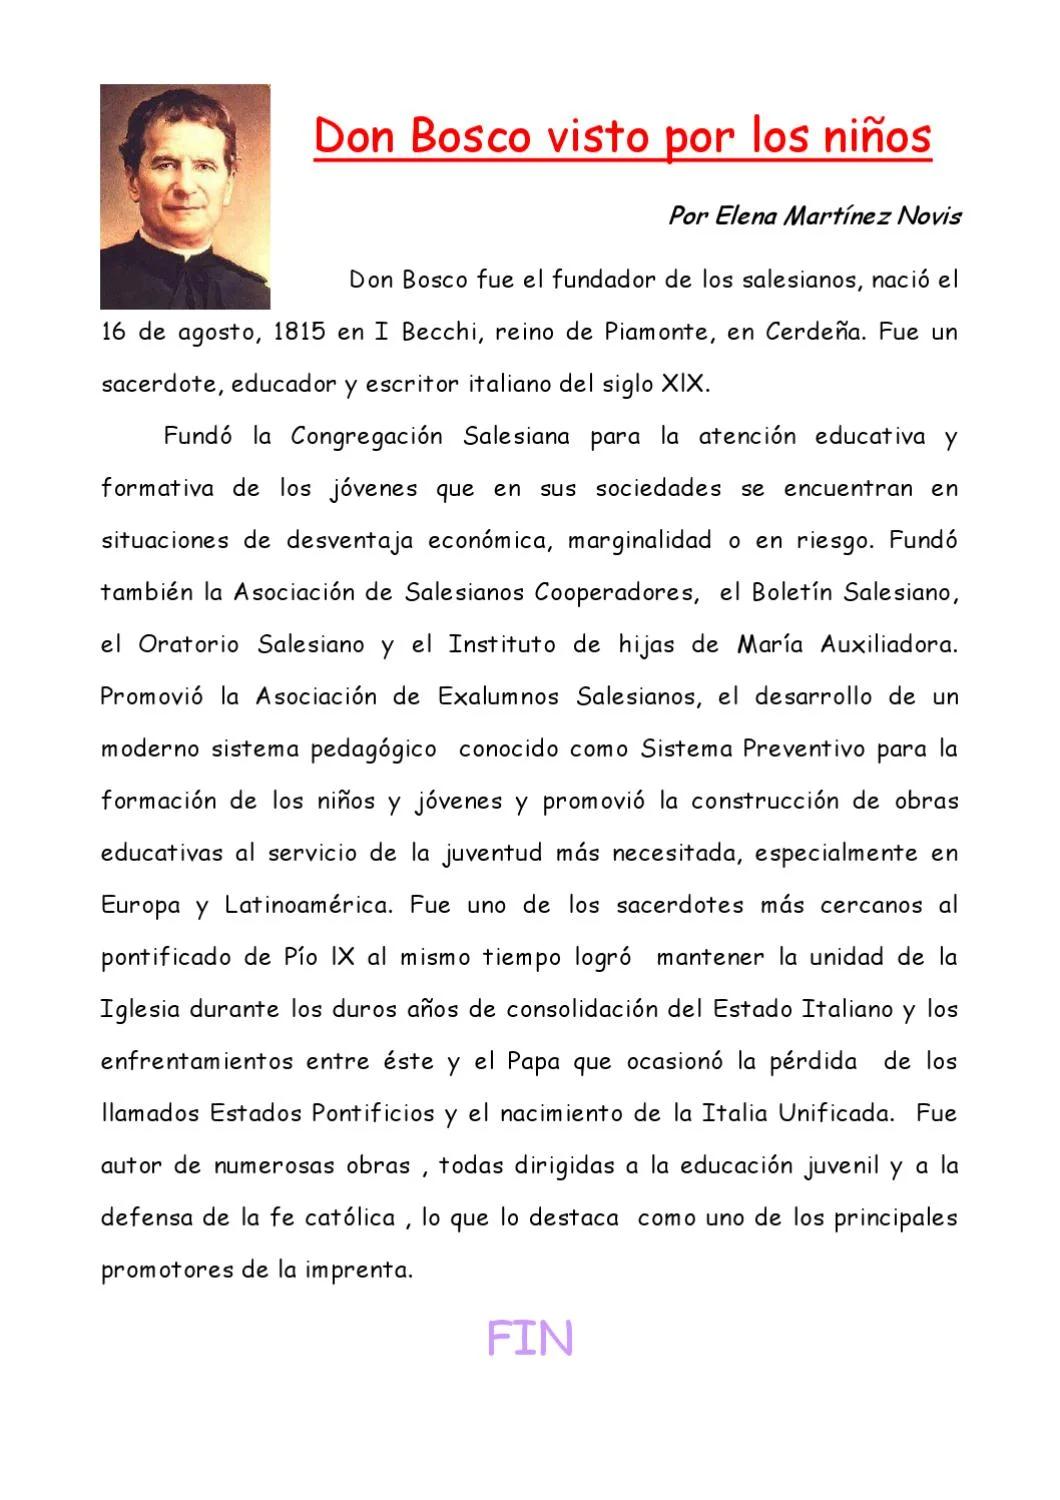 don juan bosco biografia resumen - Quién es Don Bosco resumen para niños